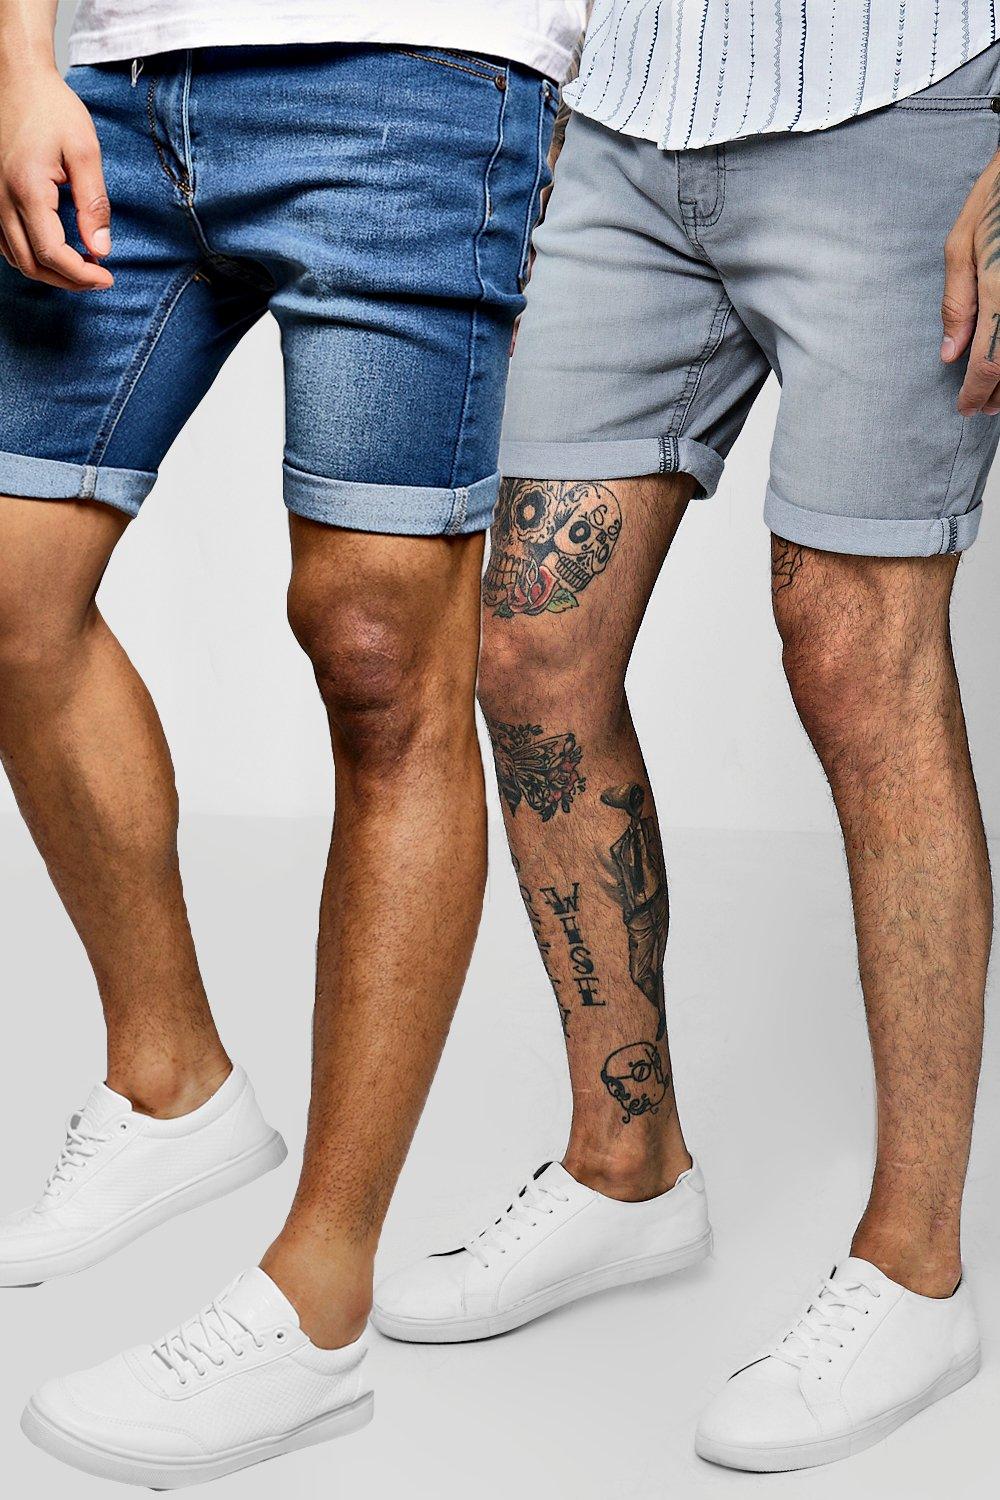 tight jean shorts mens